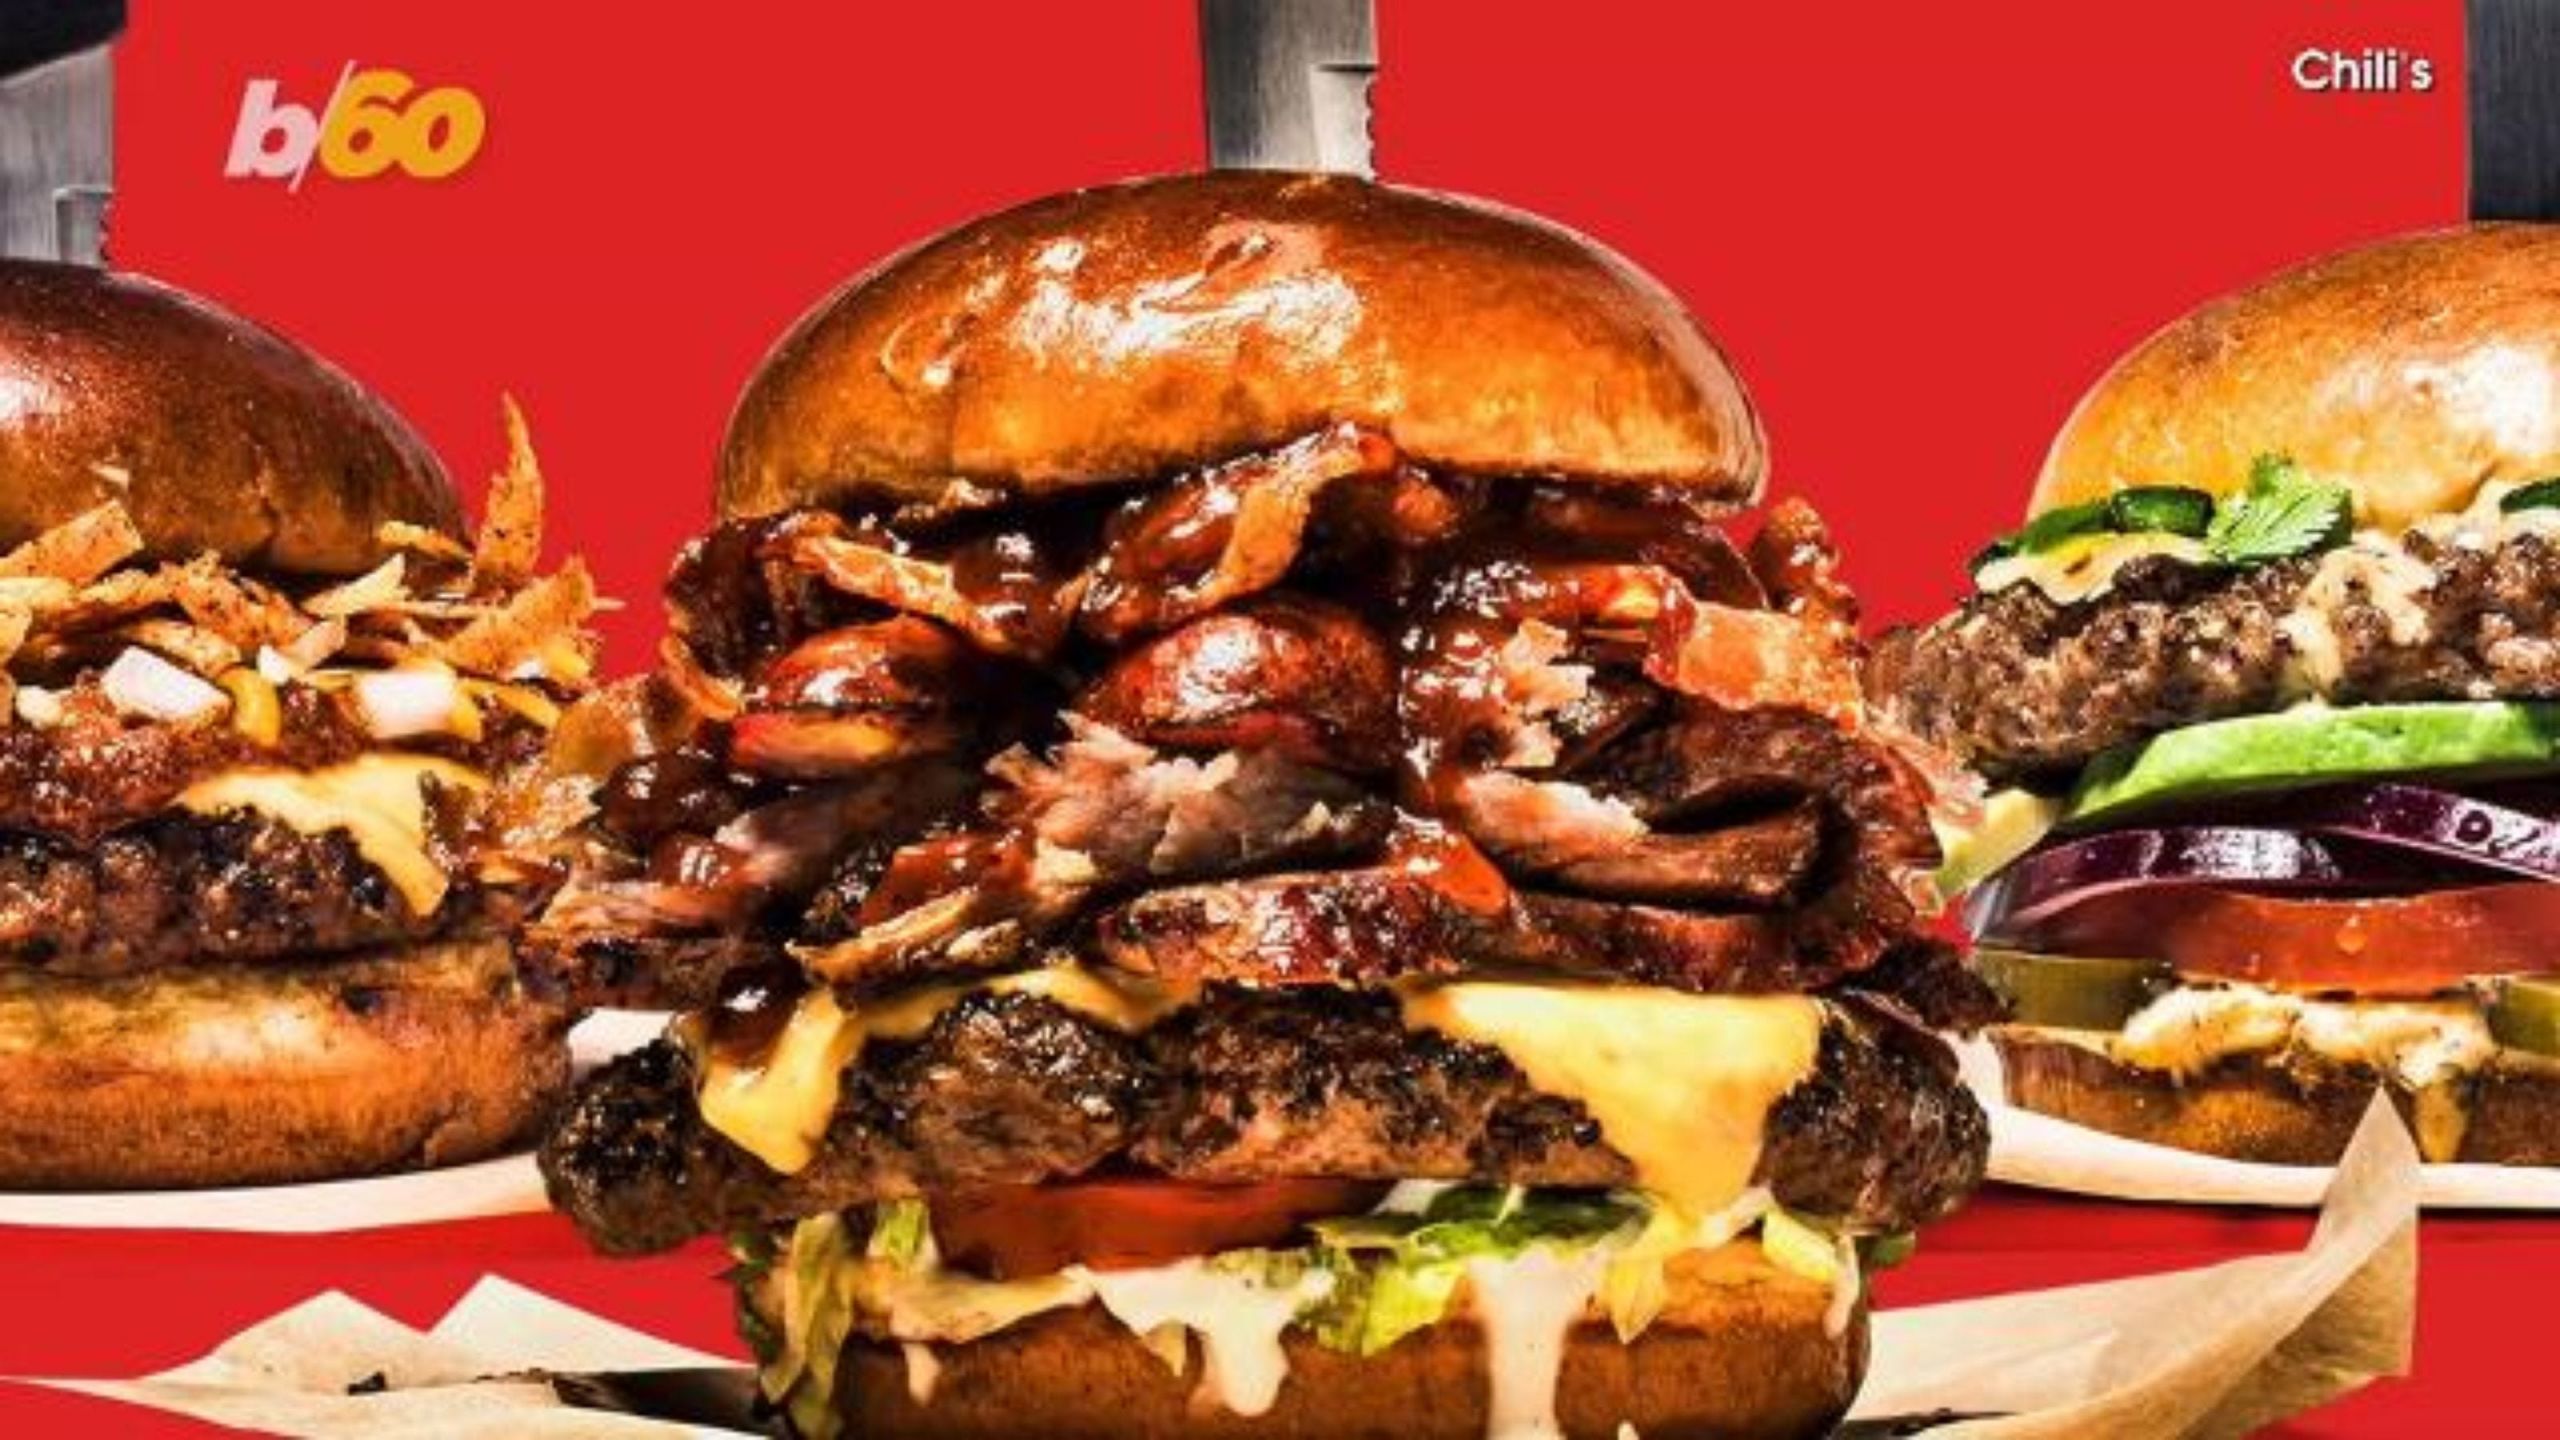 Ron'S Hamburgers And Chili
 Meet Chili s nearly 2 000 calorie boss burger monstrosity